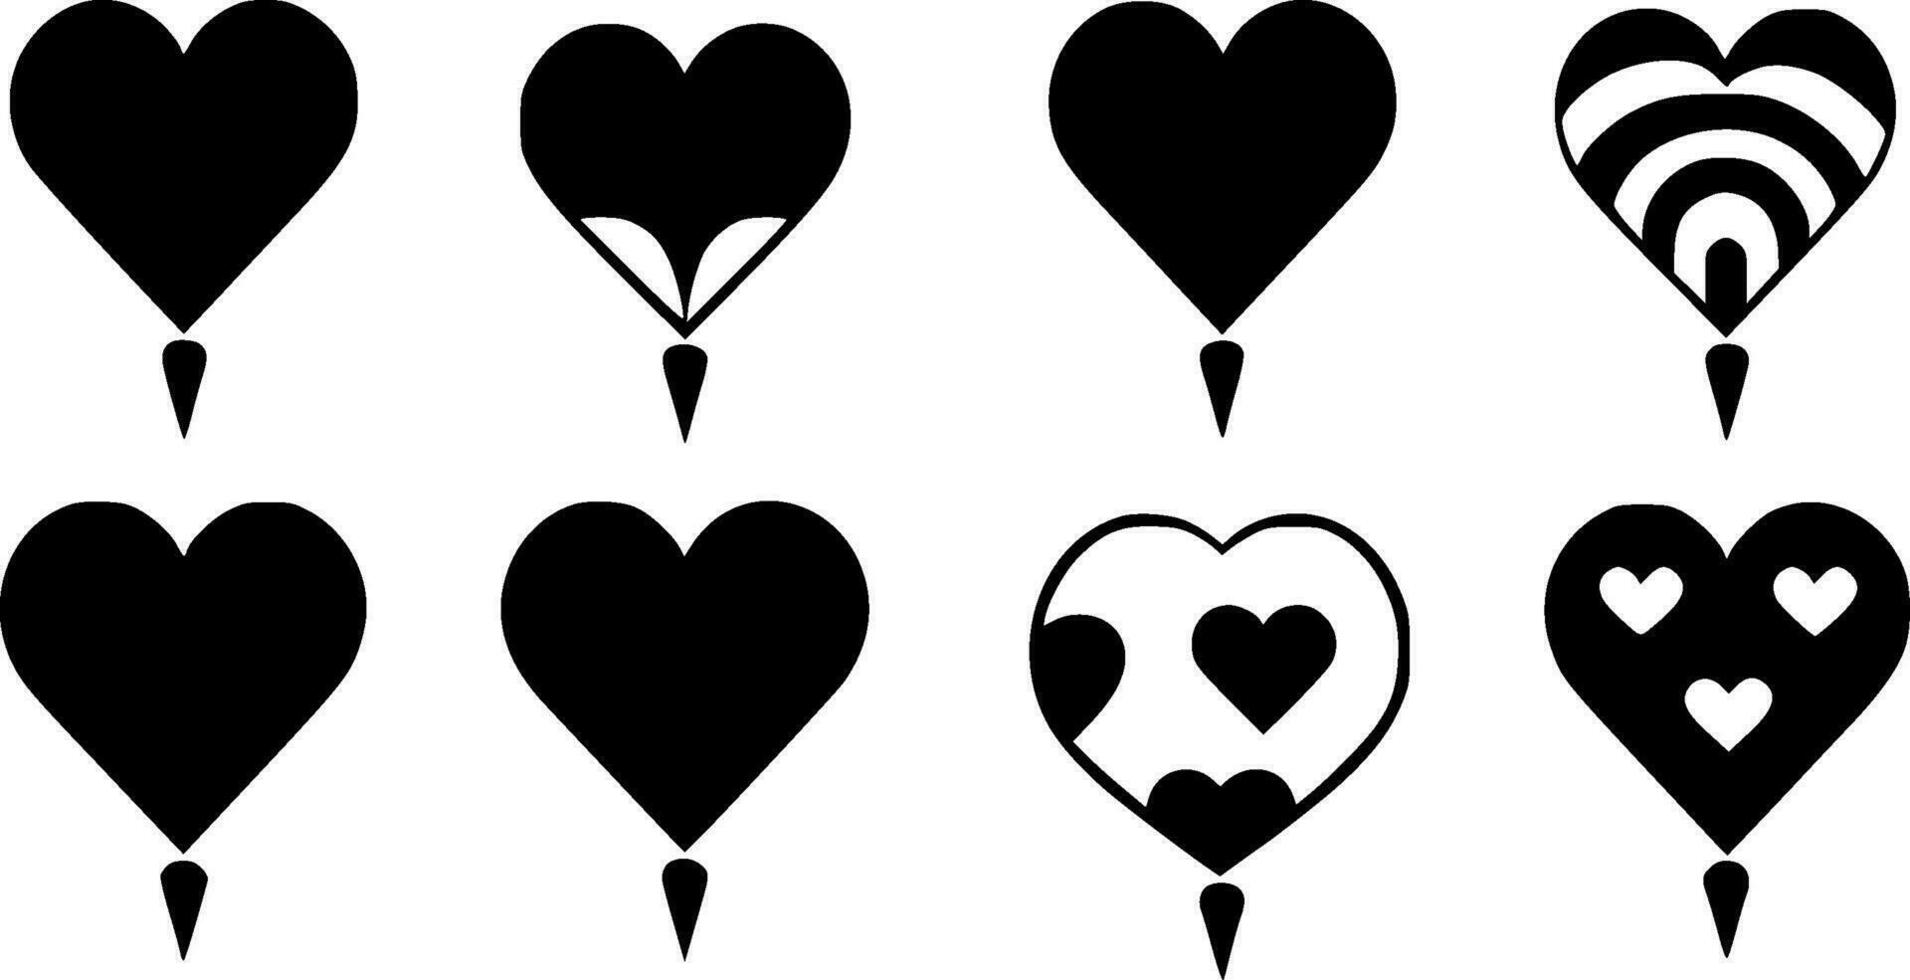 Hearts, Minimalist and Simple Silhouette - Vector illustration